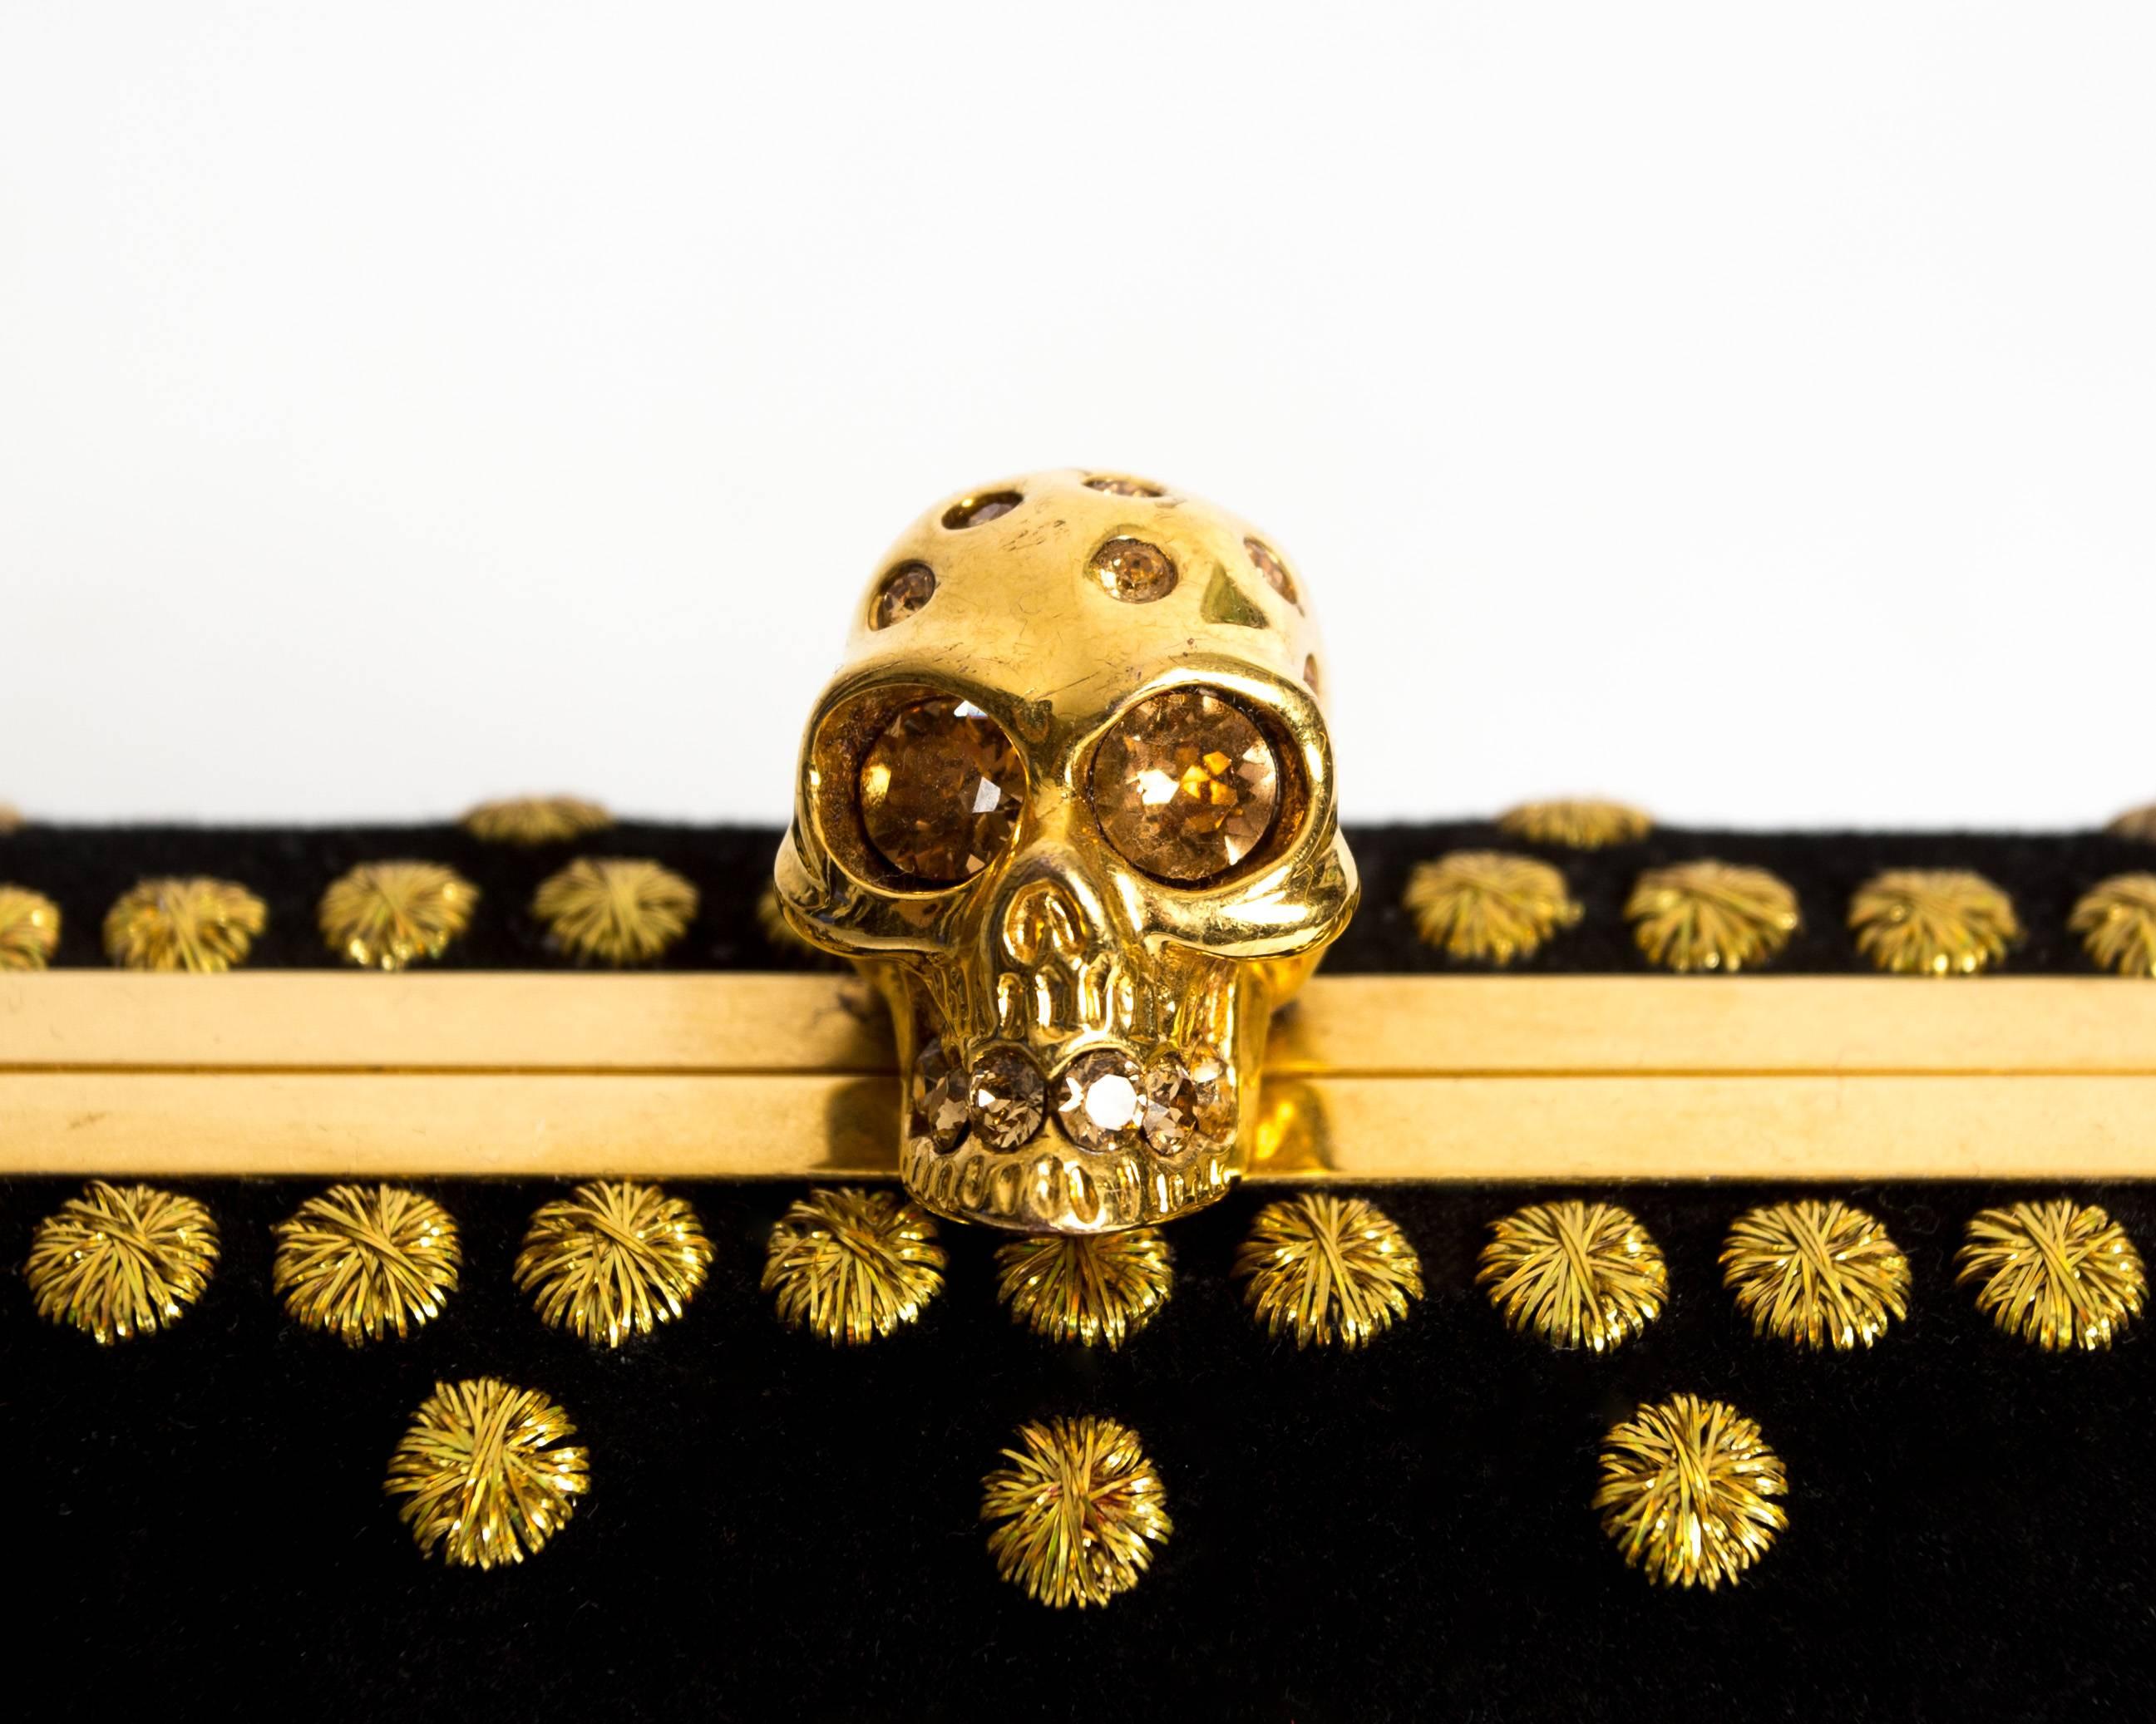 Alexander McQueen hard case embroidered skull evening clutch bag